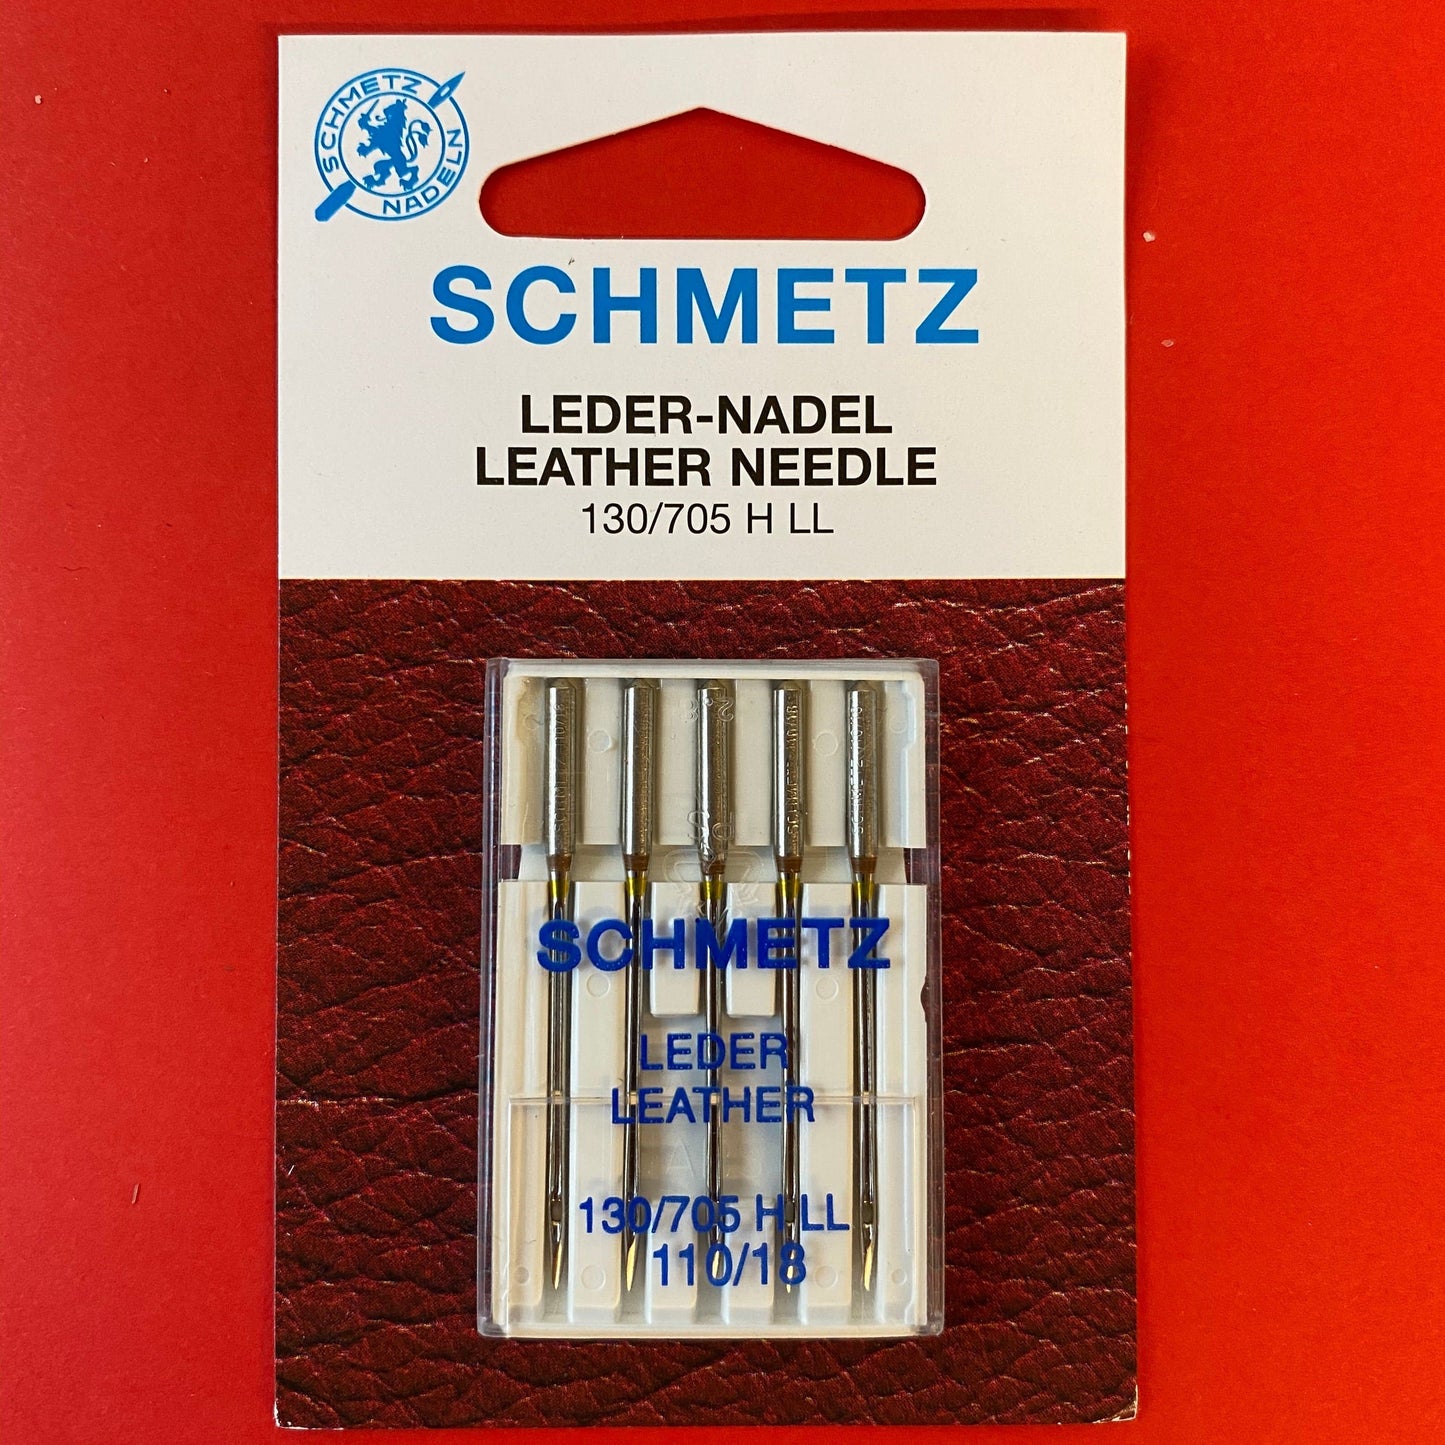 Schmetz Leather Needles 130/705 G LL 110 weight - 5 pack